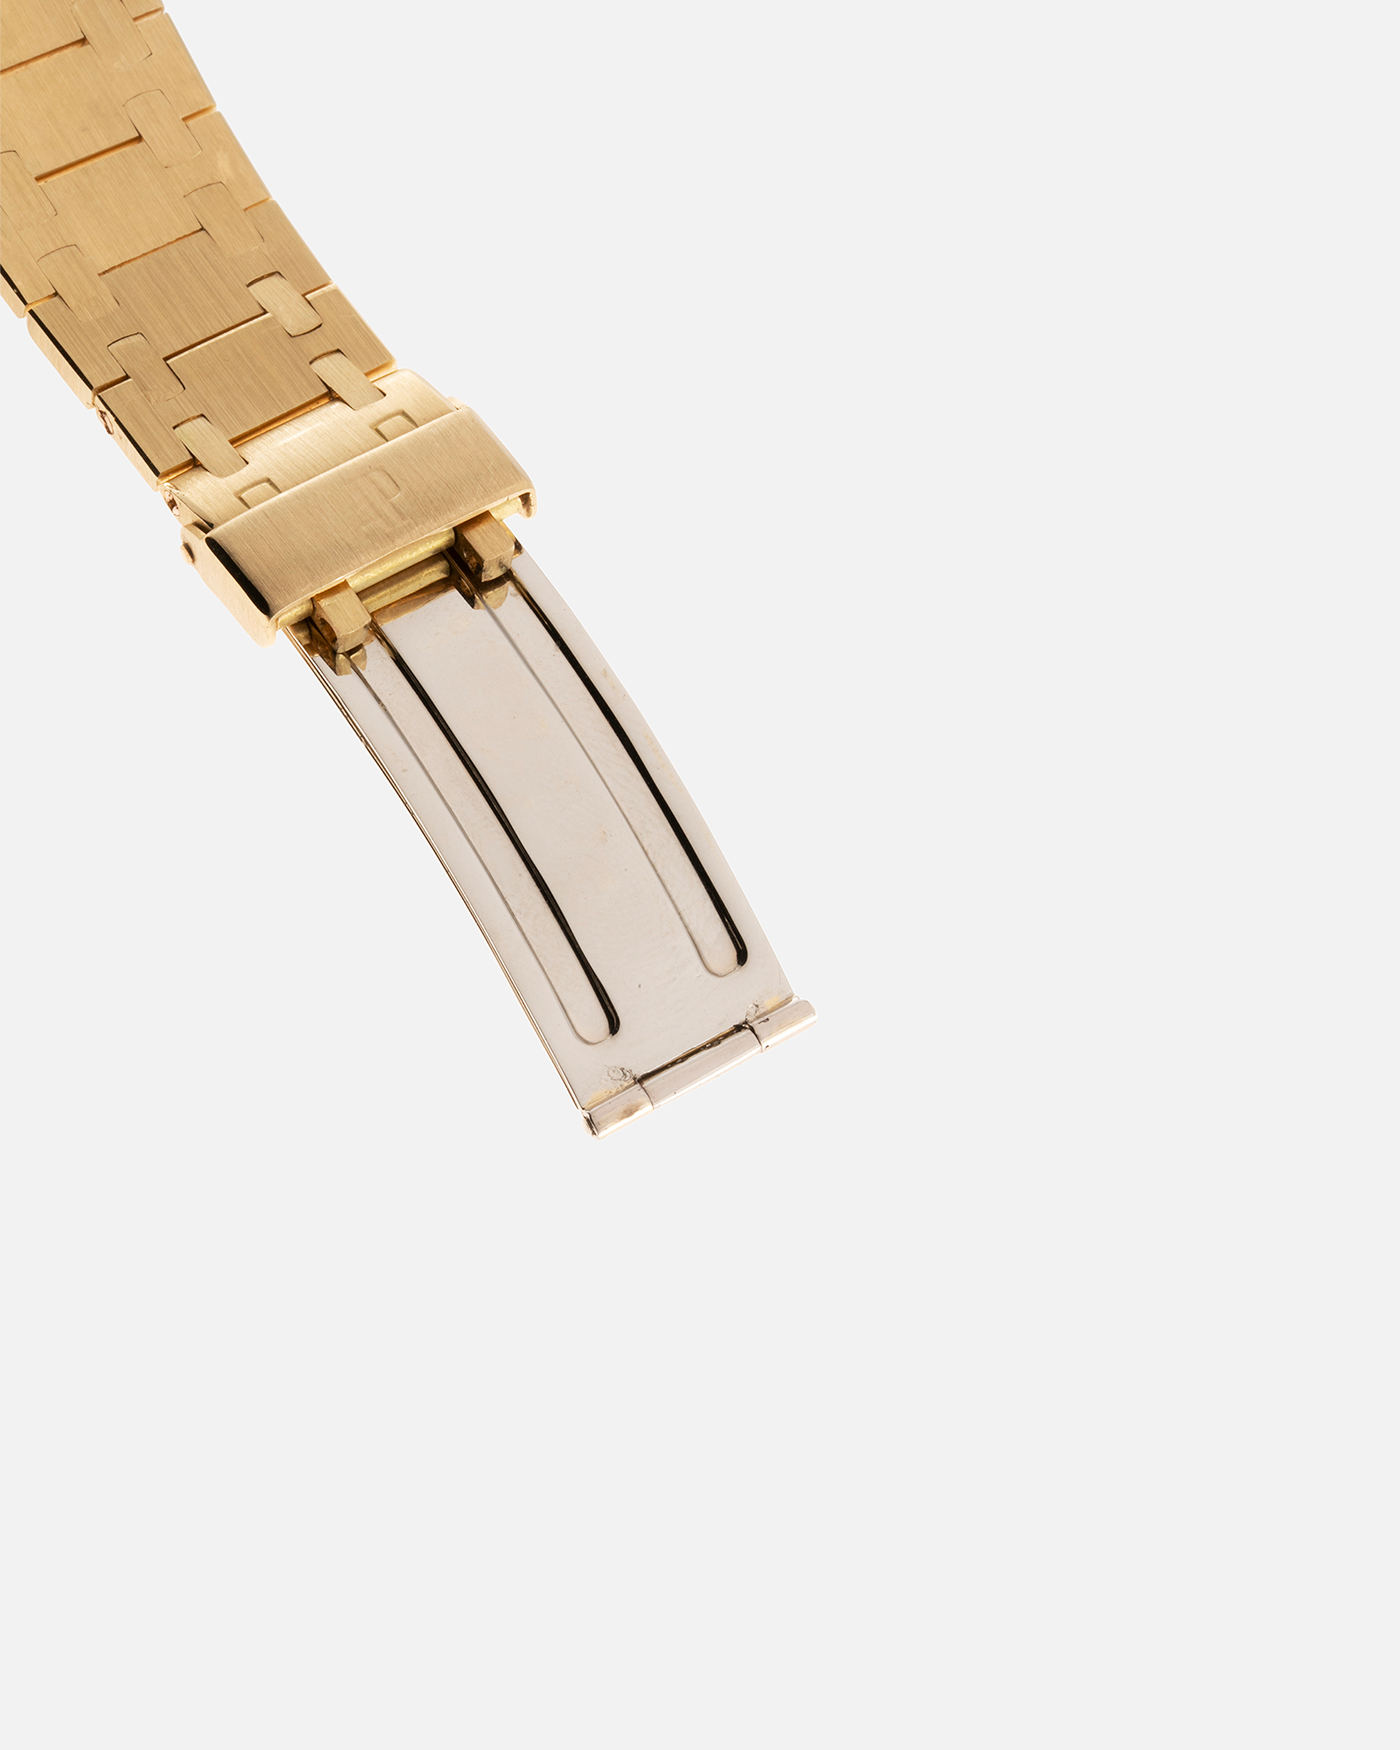 Brand: Audemars Piguet Year: 1980’s Model: Royal Oak Reference Number: 5402BA Material: 18-carat Yellow Gold Movement: Cal 2121 Case Diameter: 39mm Bracelet: Audemars Piguet Integrated 18-carat Yellow Gold Bracelet